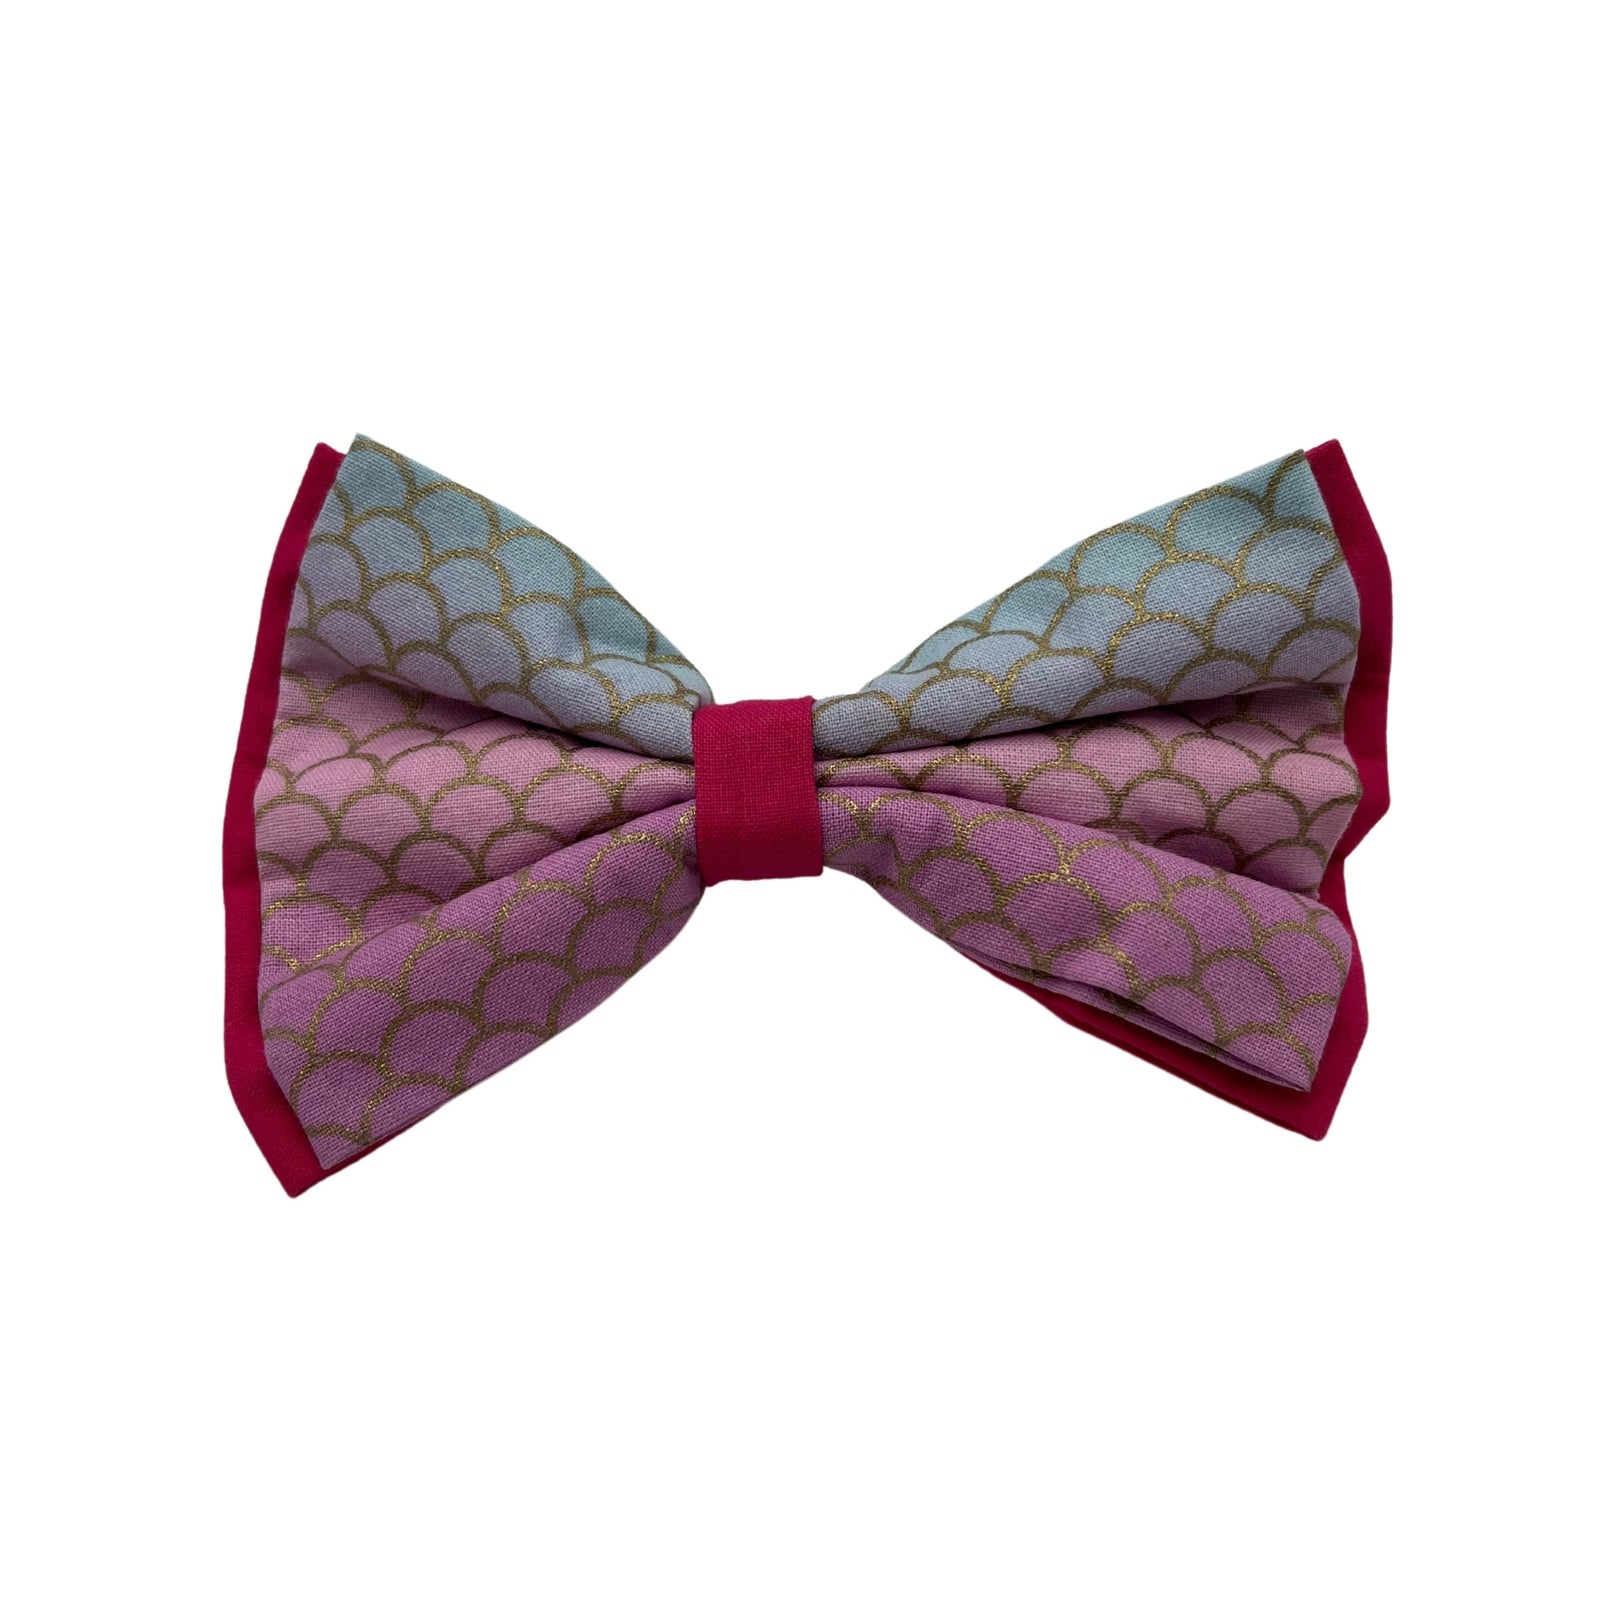 Pop-Up Mākeke - humBOWbarks Pet Wear - Large Double Bow Tie - Mermaid - Front View